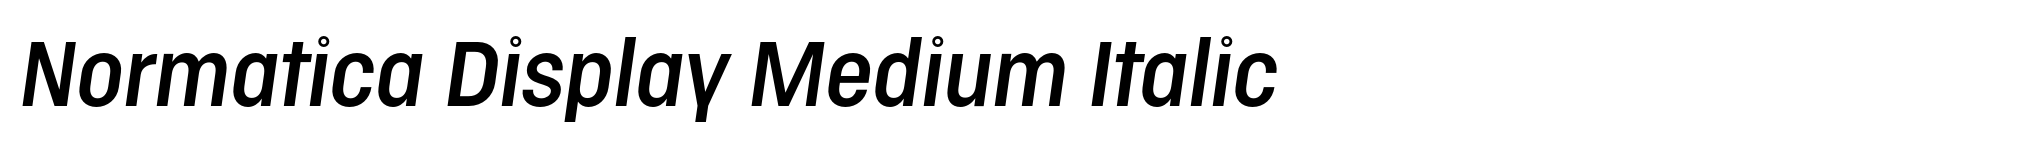 Normatica Display Medium Italic image